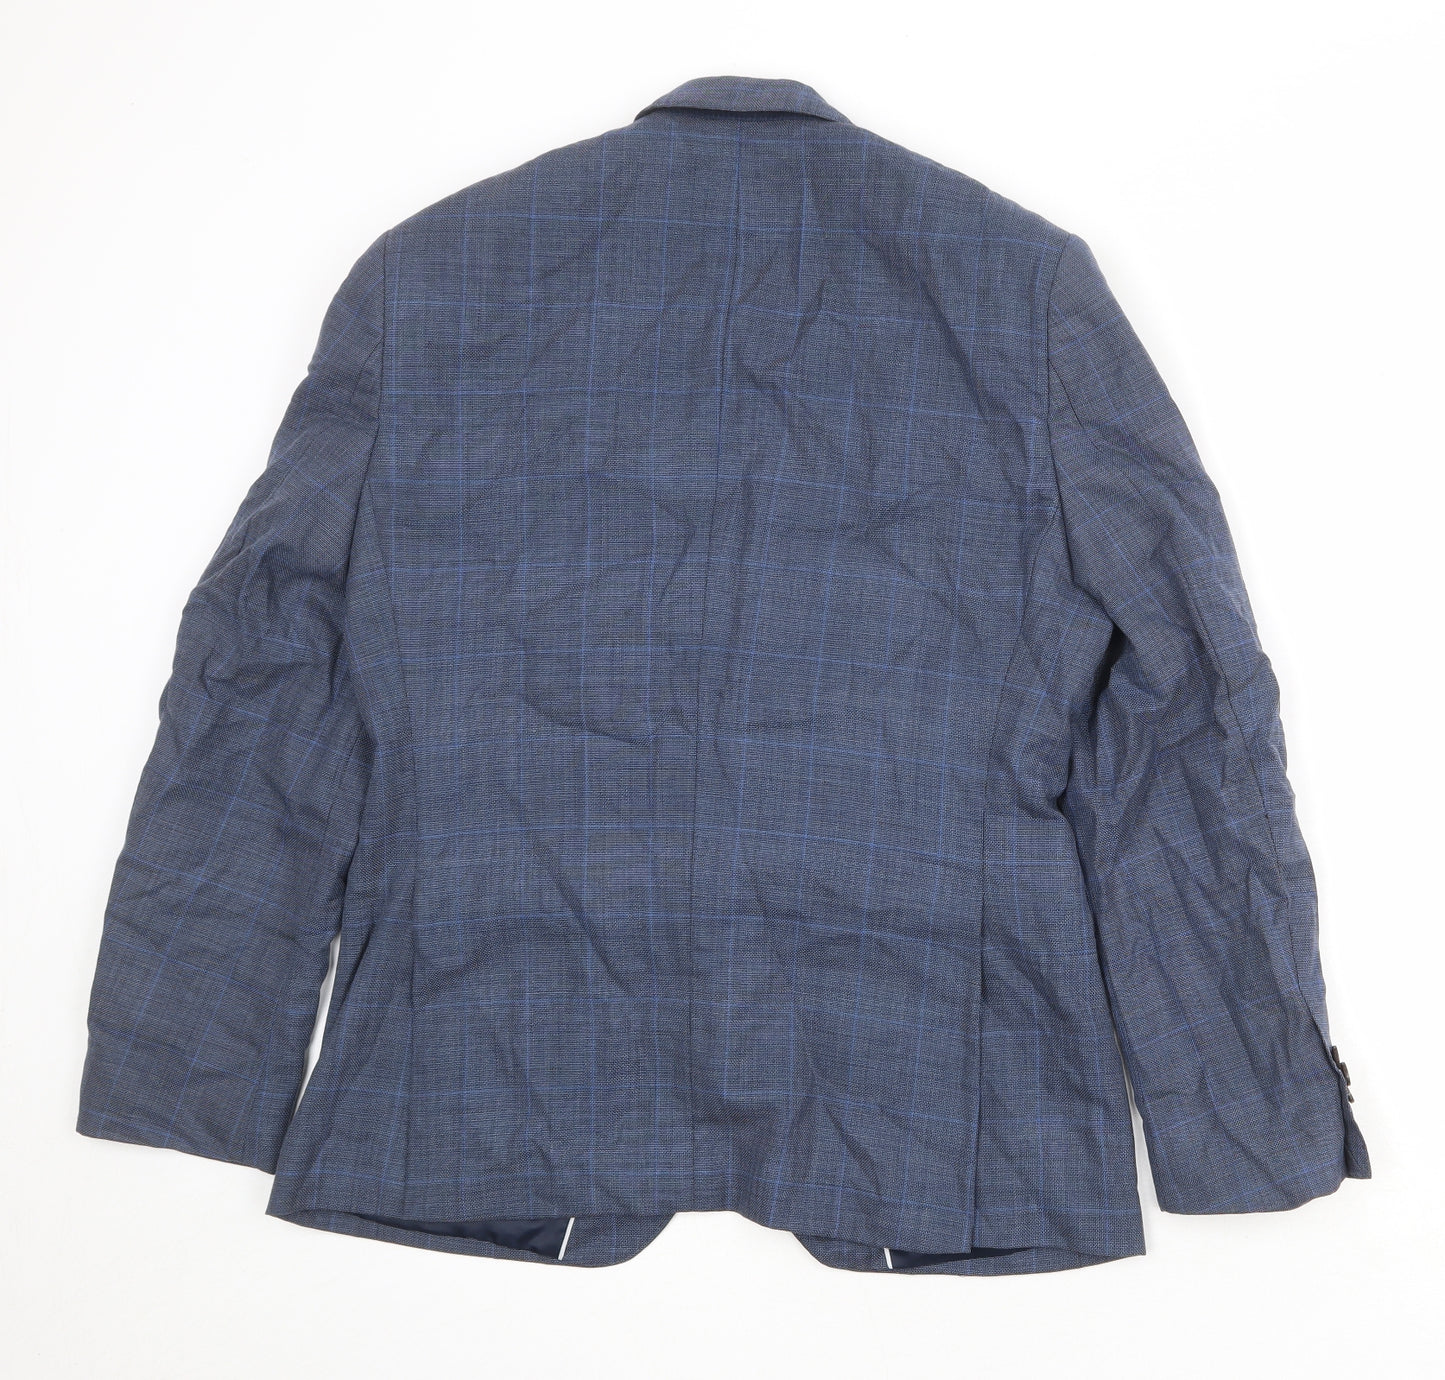 Burton Mens Blue Plaid Wool Jacket Suit Size 38 Regular